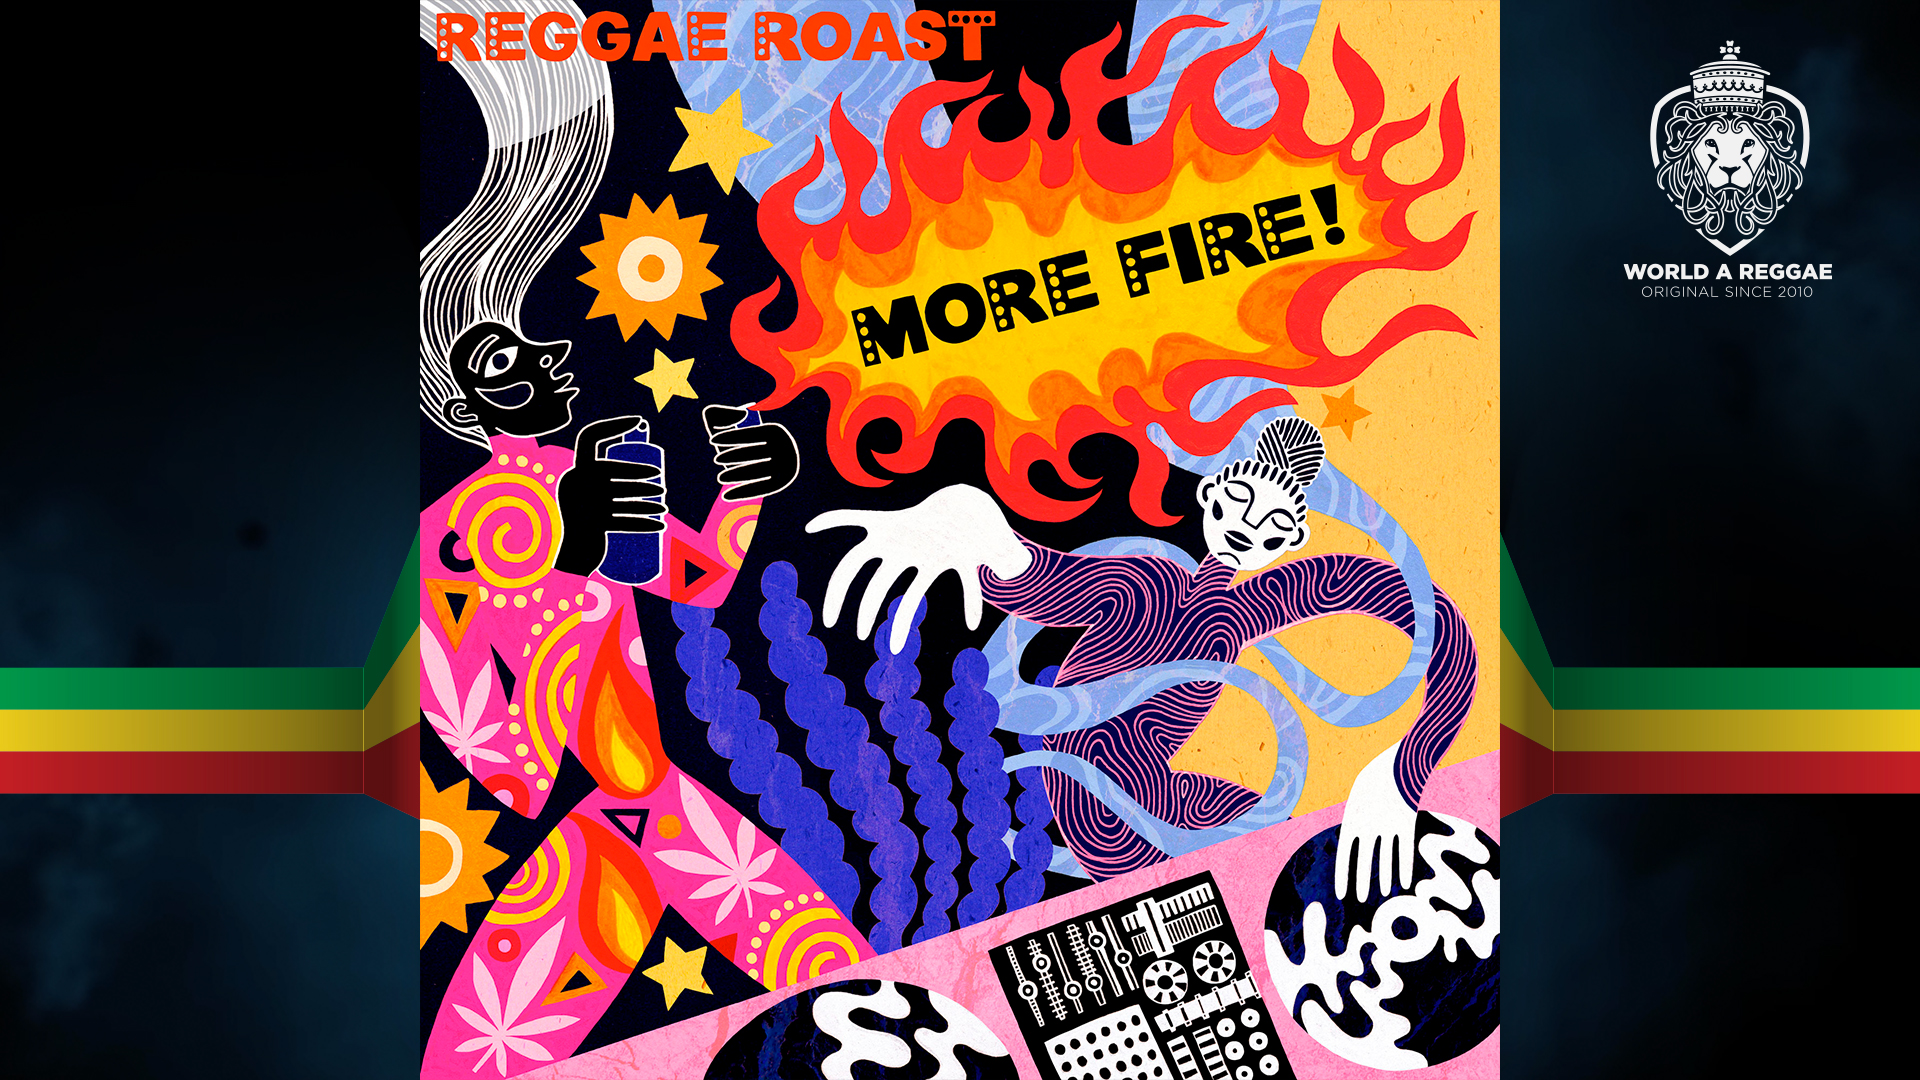 Reggae Roast presents their 2nd studio album More Fire!.